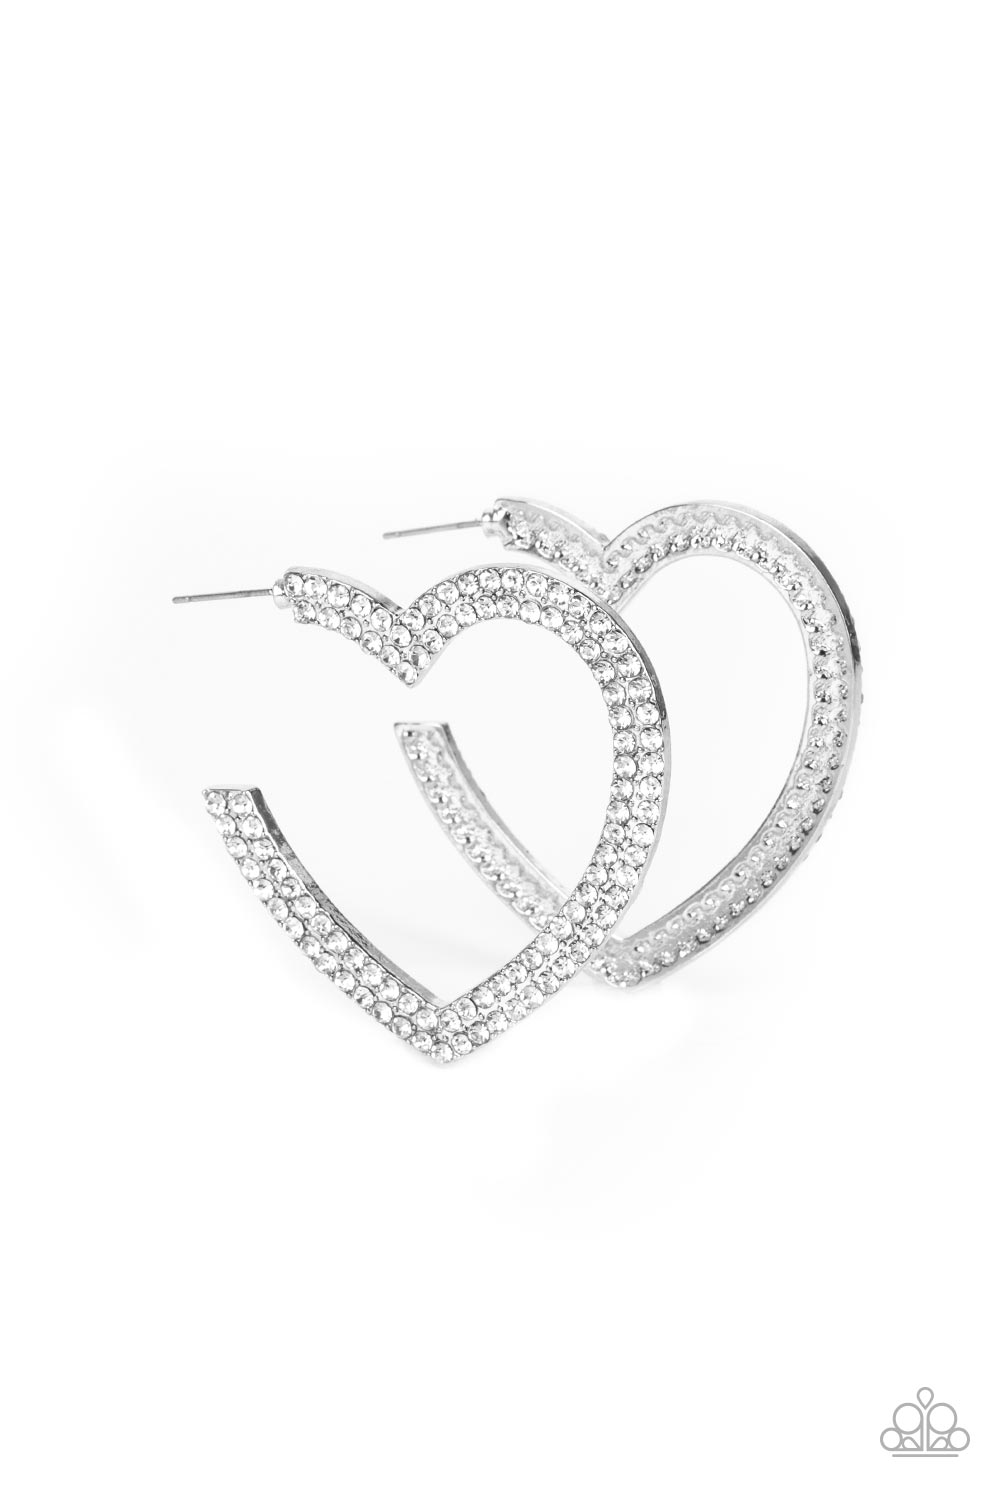 AMORE to Love - White Hoop Earrings - Princess Glam Shop